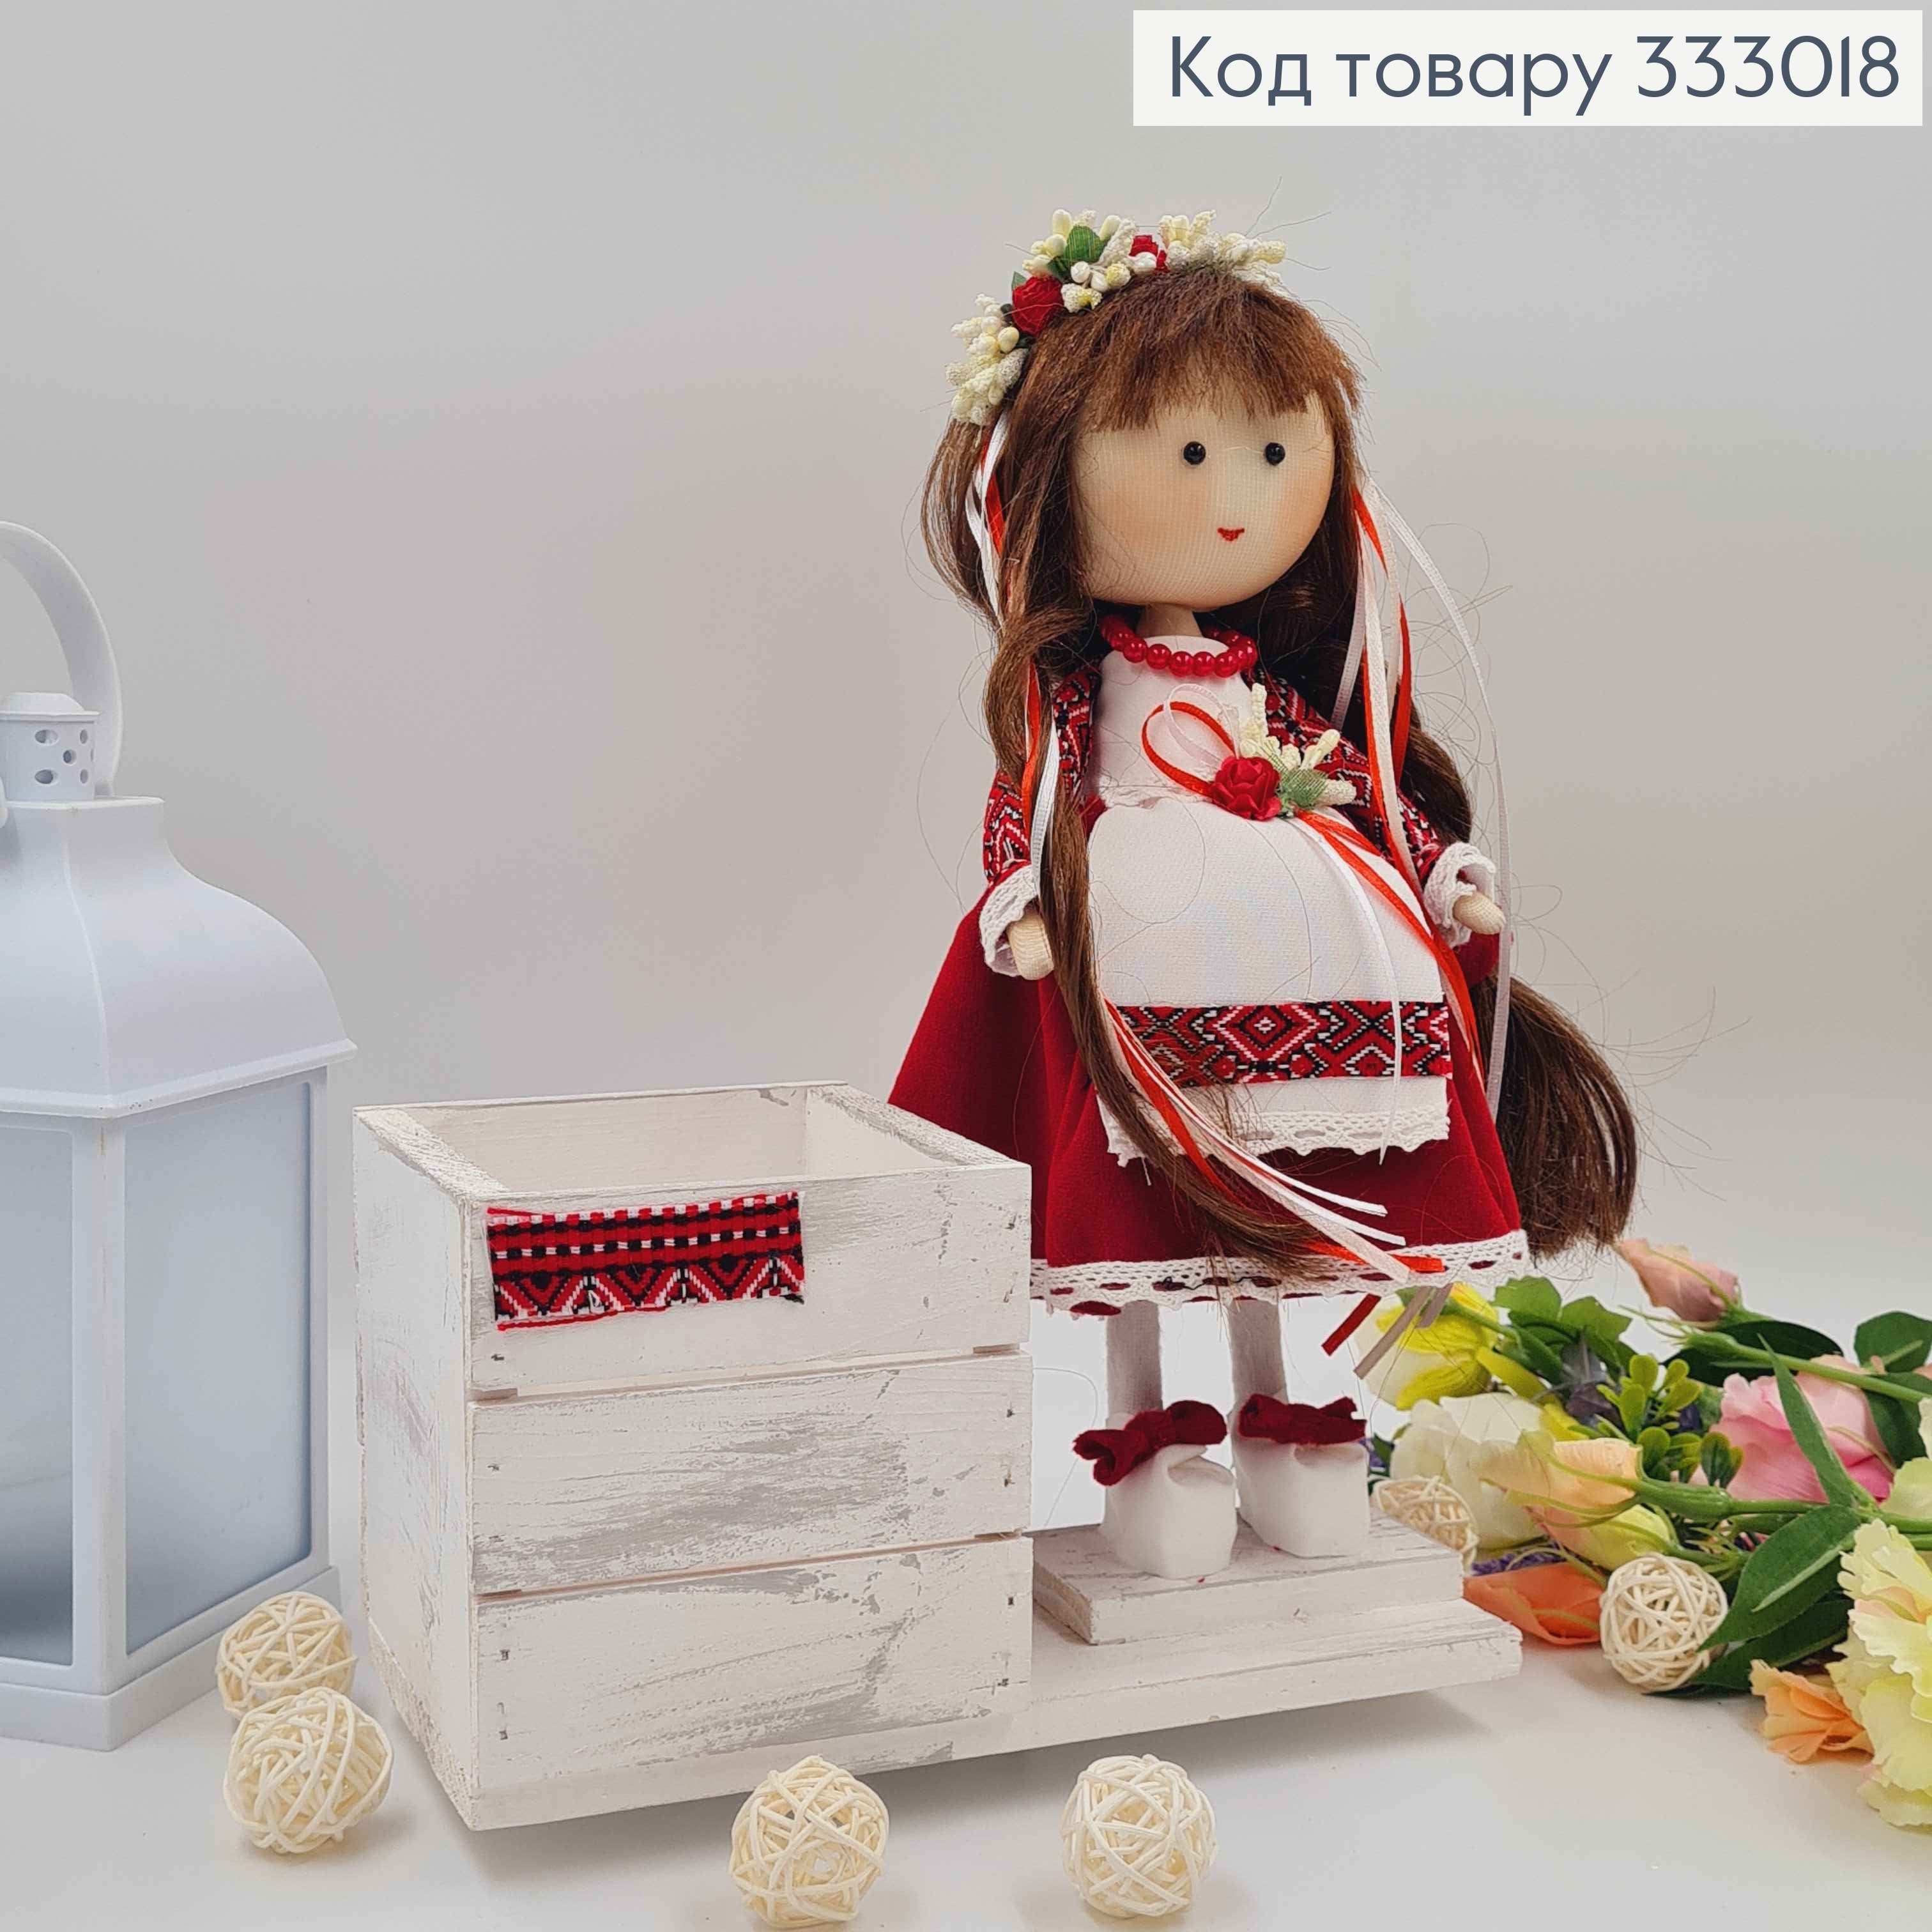 Лялька УКРАЇНОЧКА (32см) з дерев"яним кашпо (11*11см) см,ручна робота, Україна 333018 фото 2